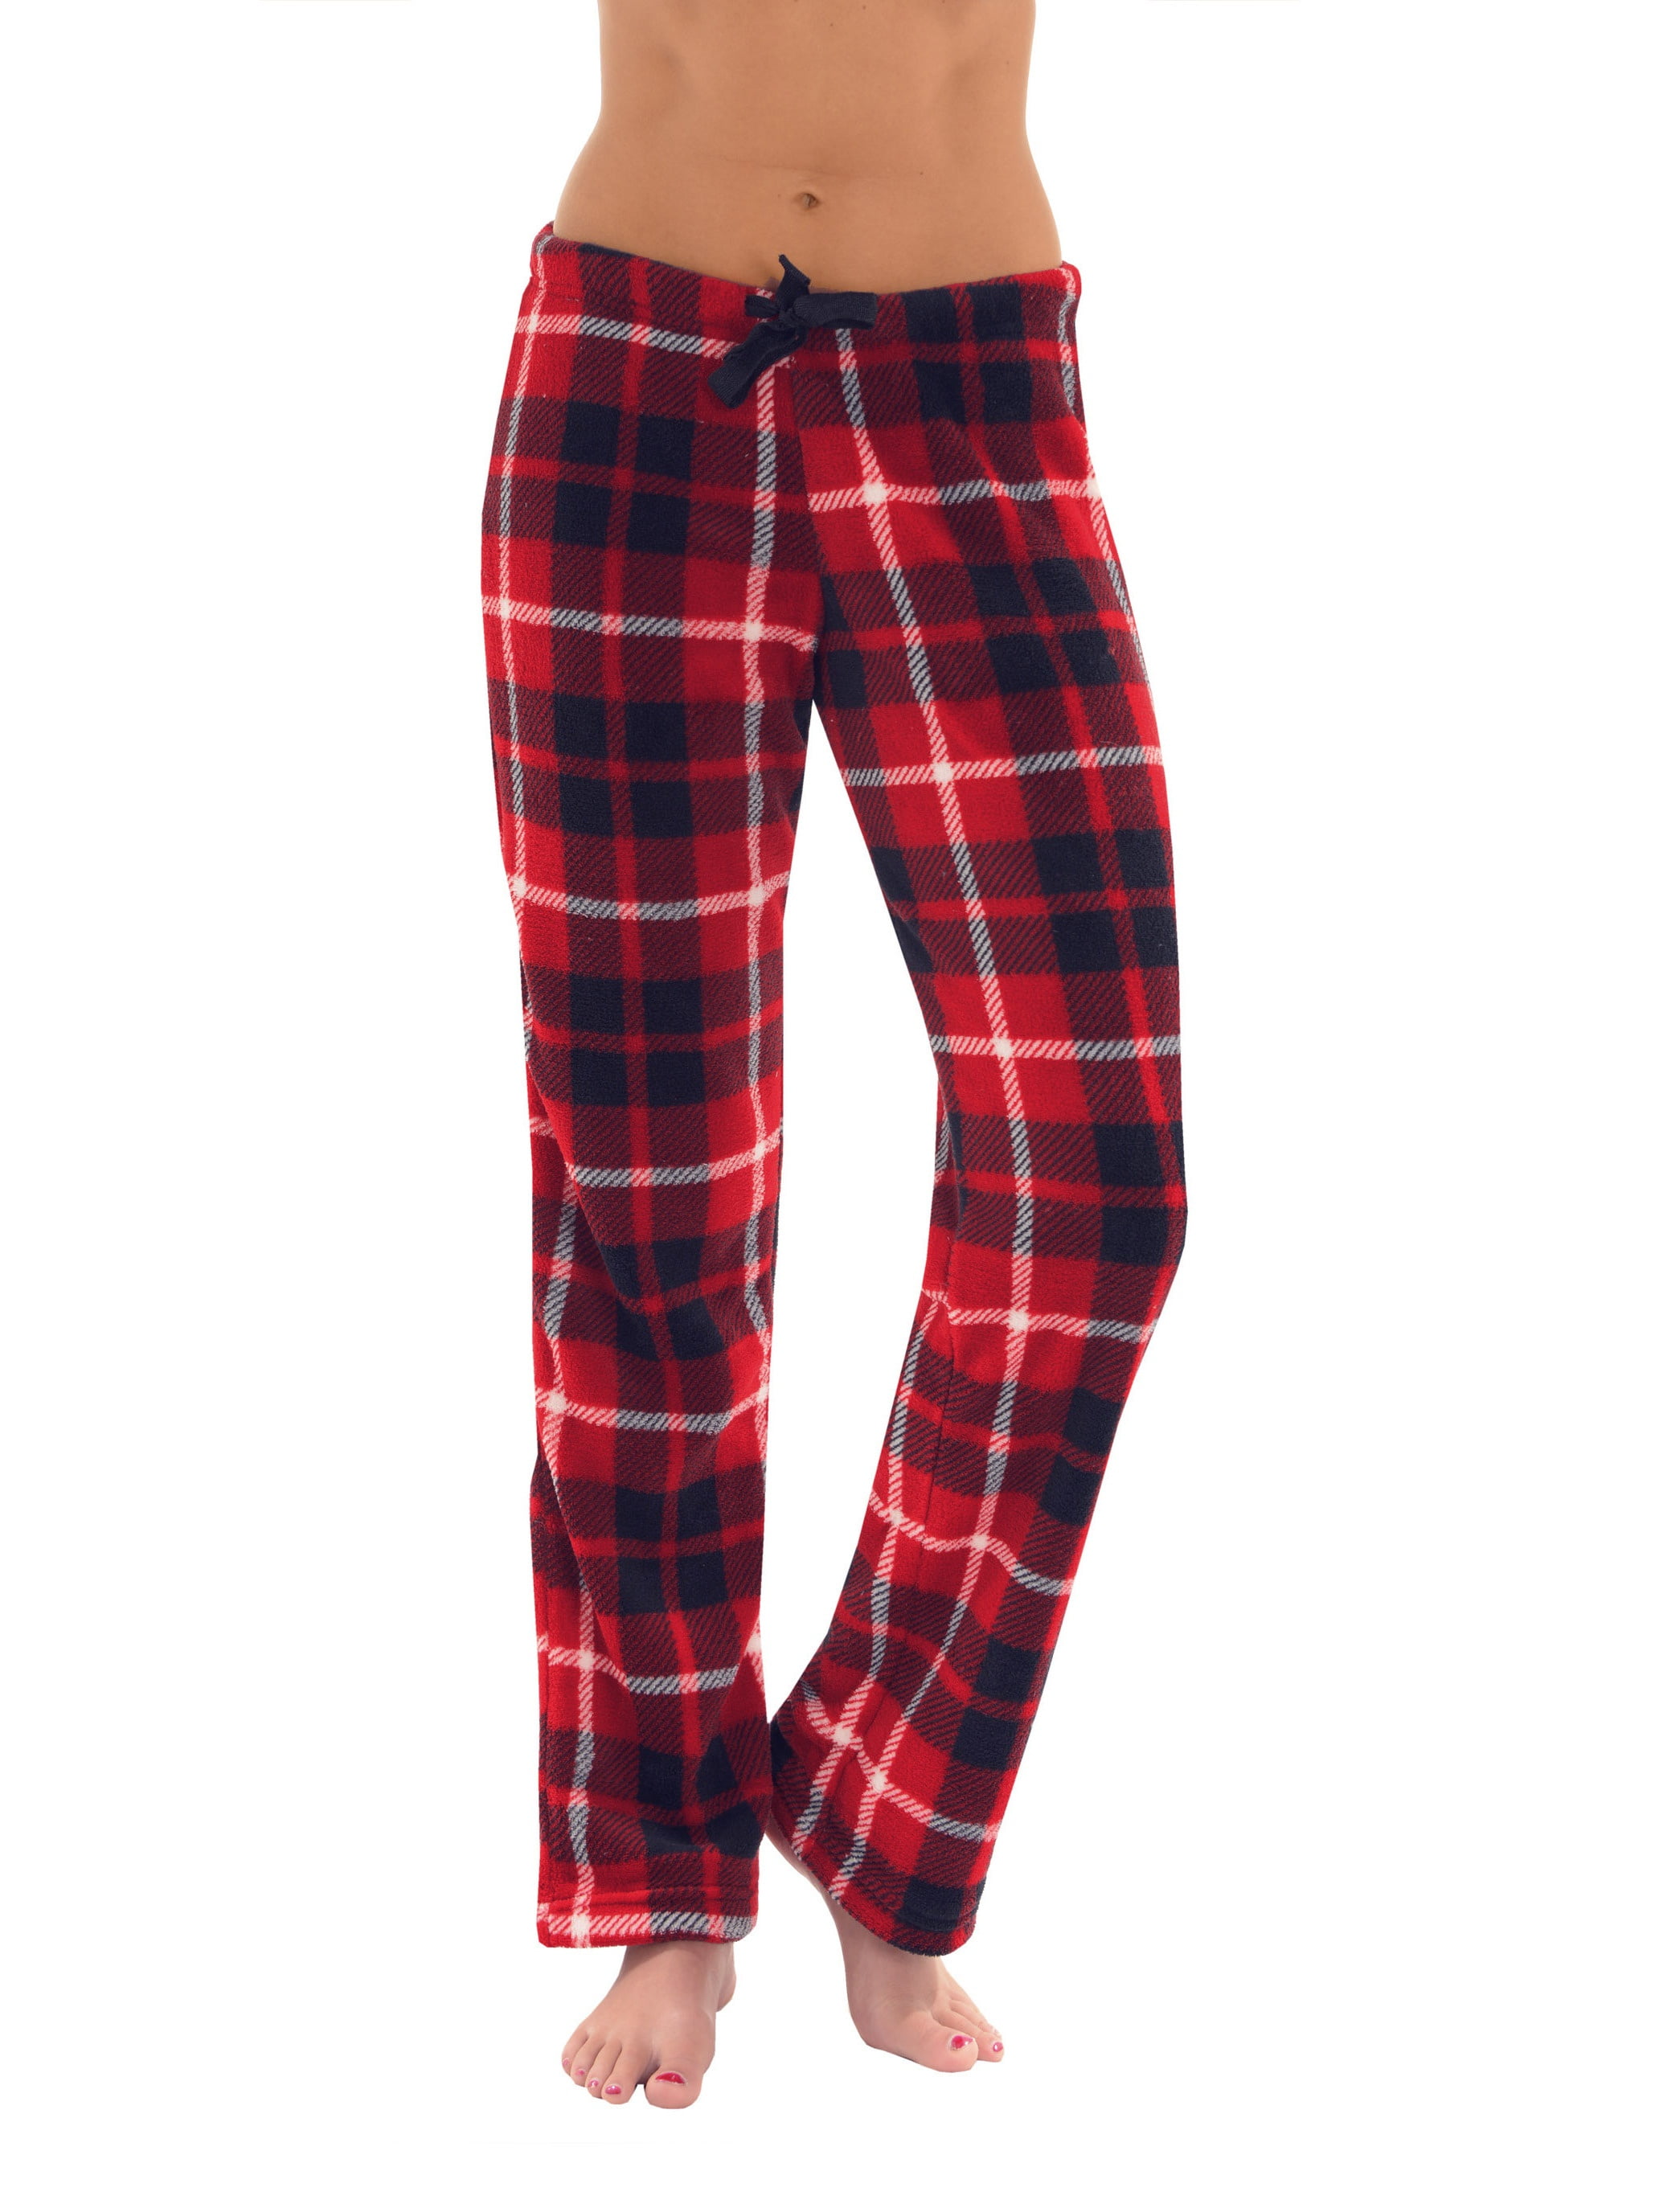 black and red plaid pj pants